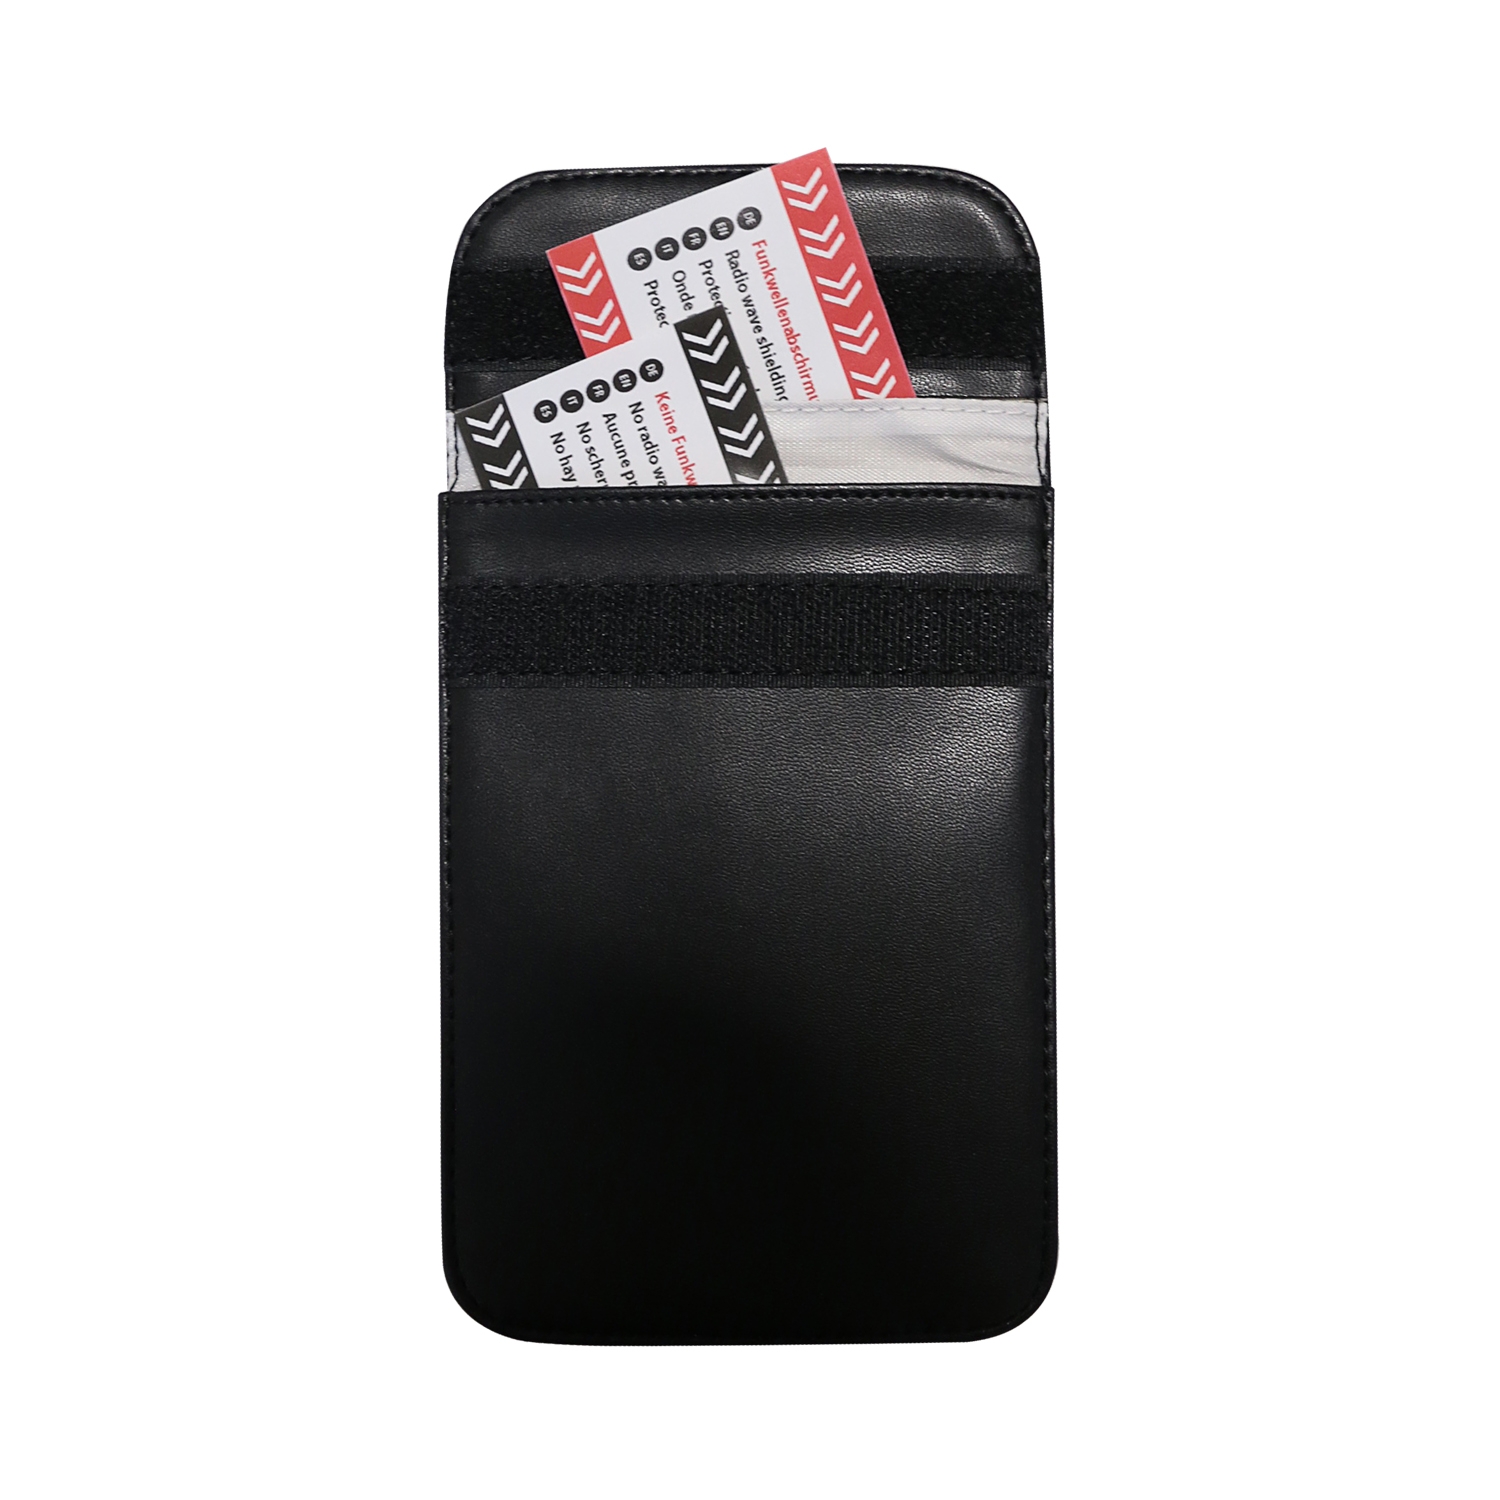 RFID Funk Smartphonetasche, Autoschlüsseletui bei HMF kaufen